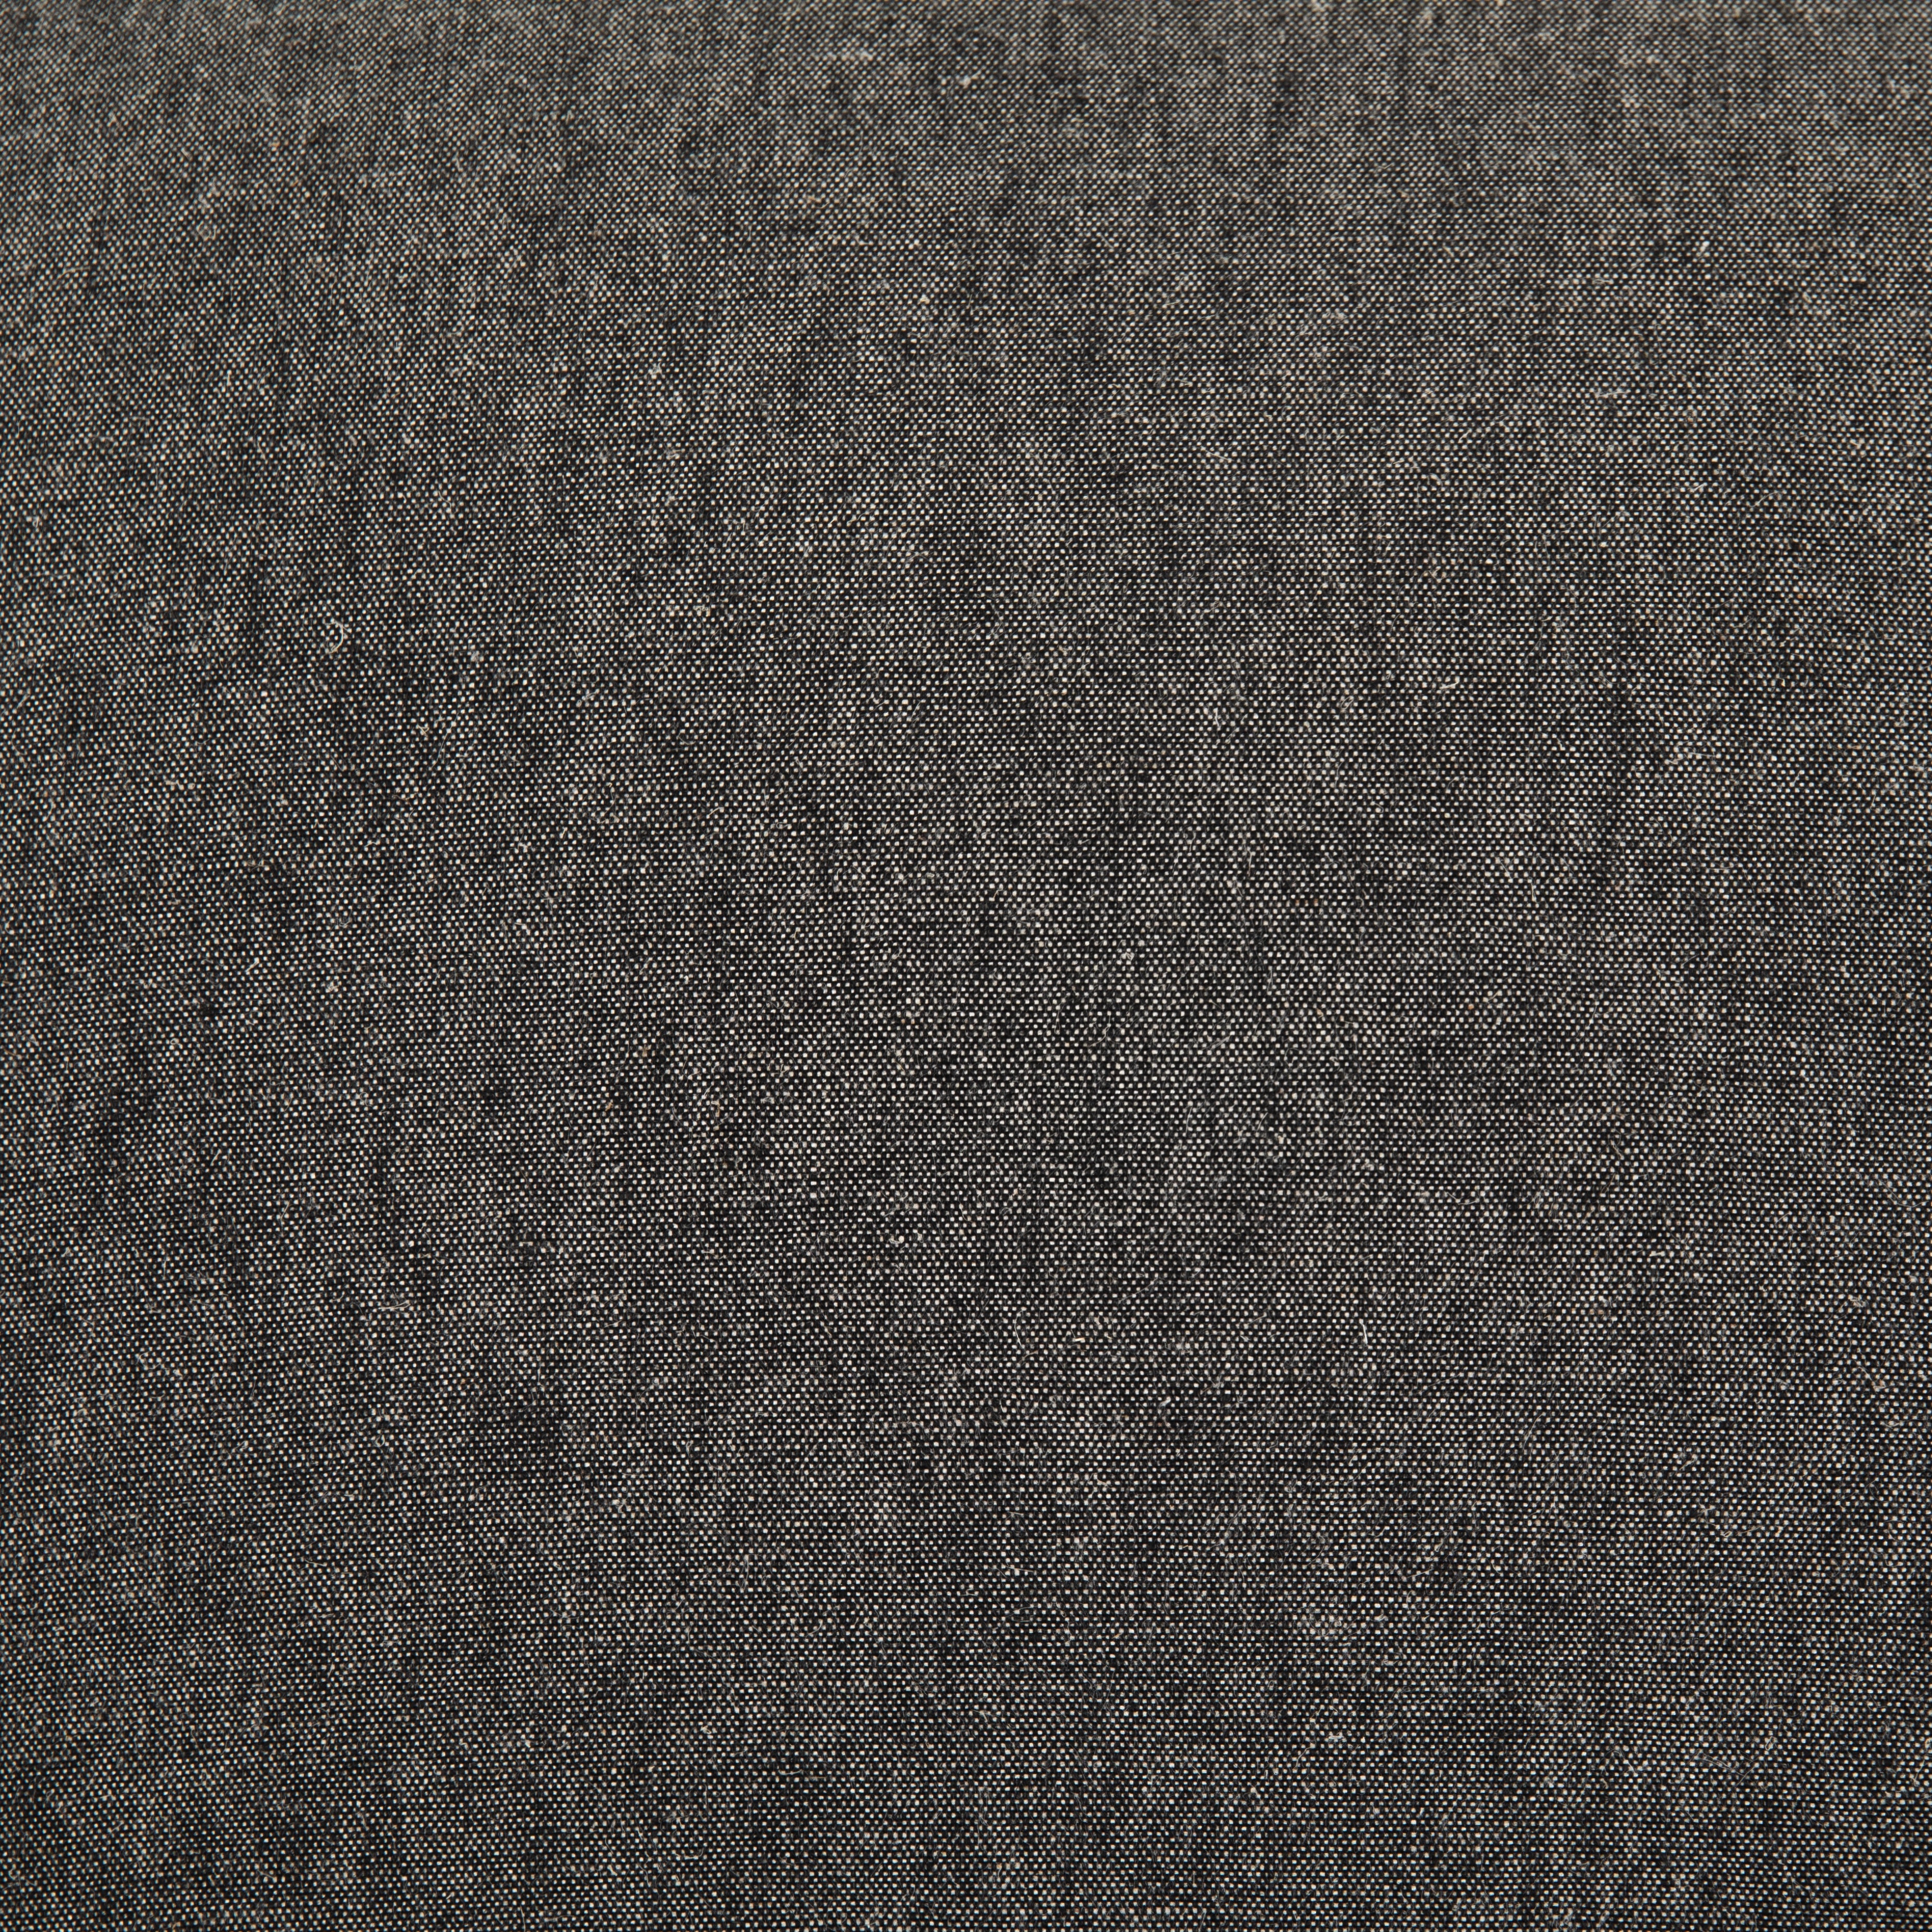 Ives Black Fabric & Black Wash Oak with Durango Smoke Leather | Reuben Chair | Valley Ridge Furniture